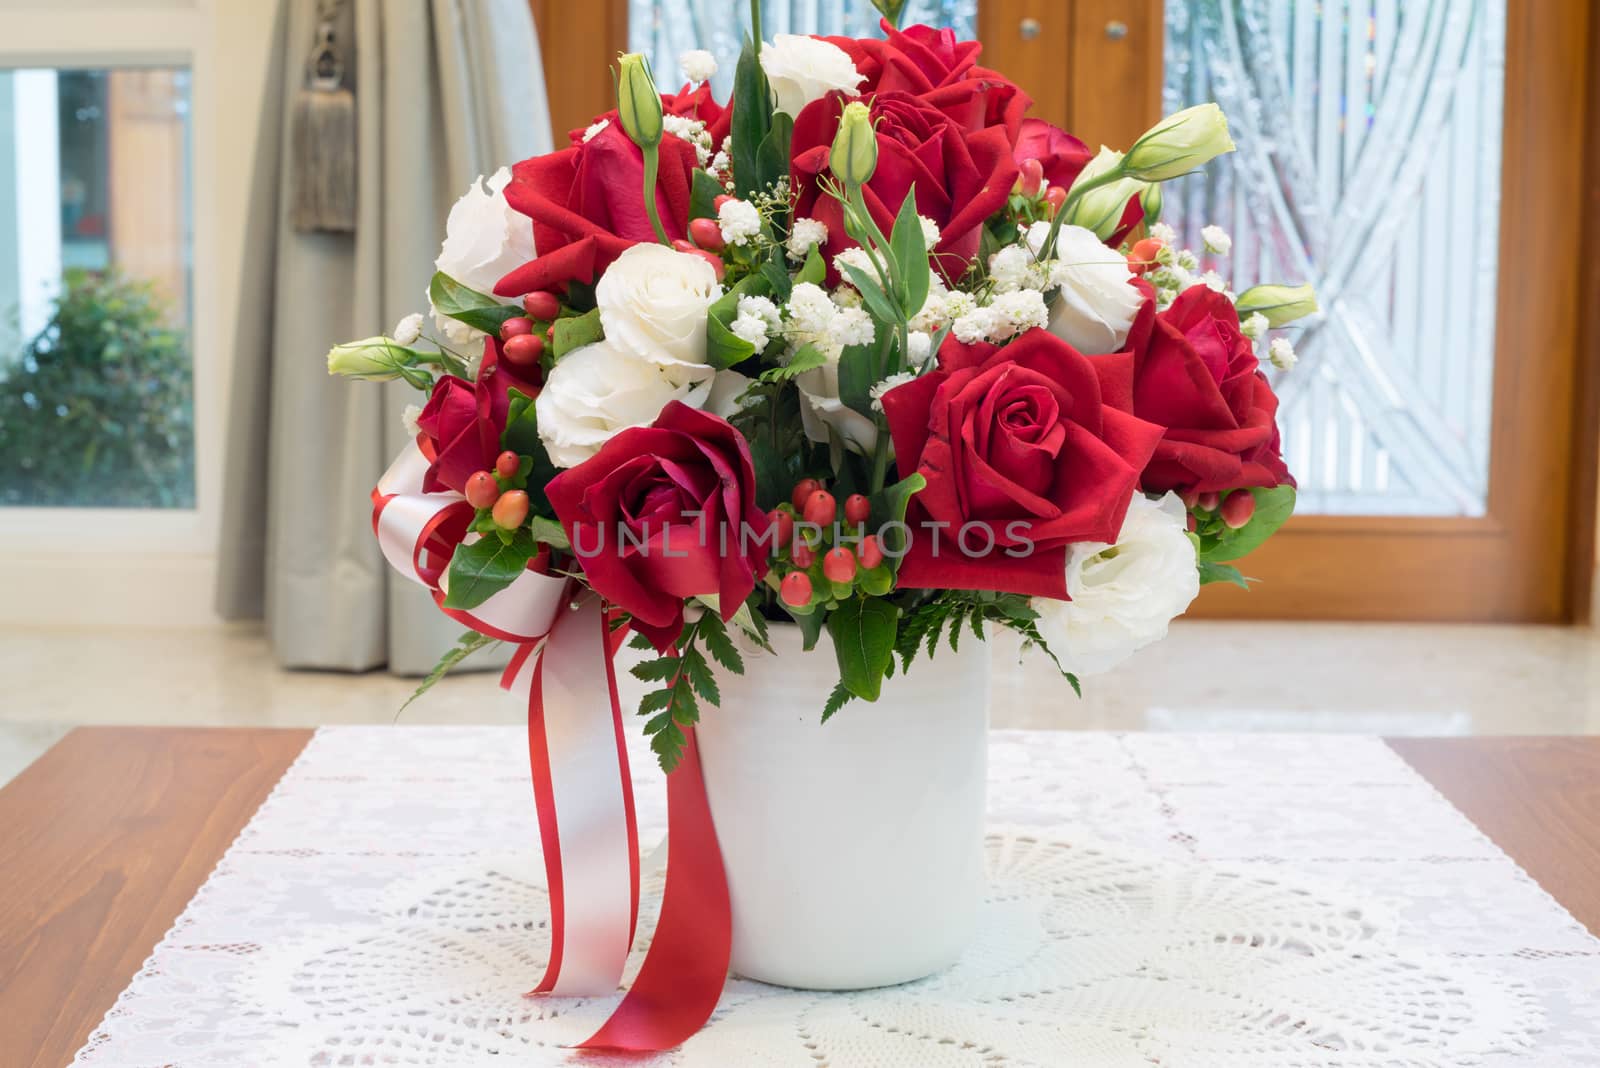 Roses flowers bouquet inside vase on desk in house for decoration